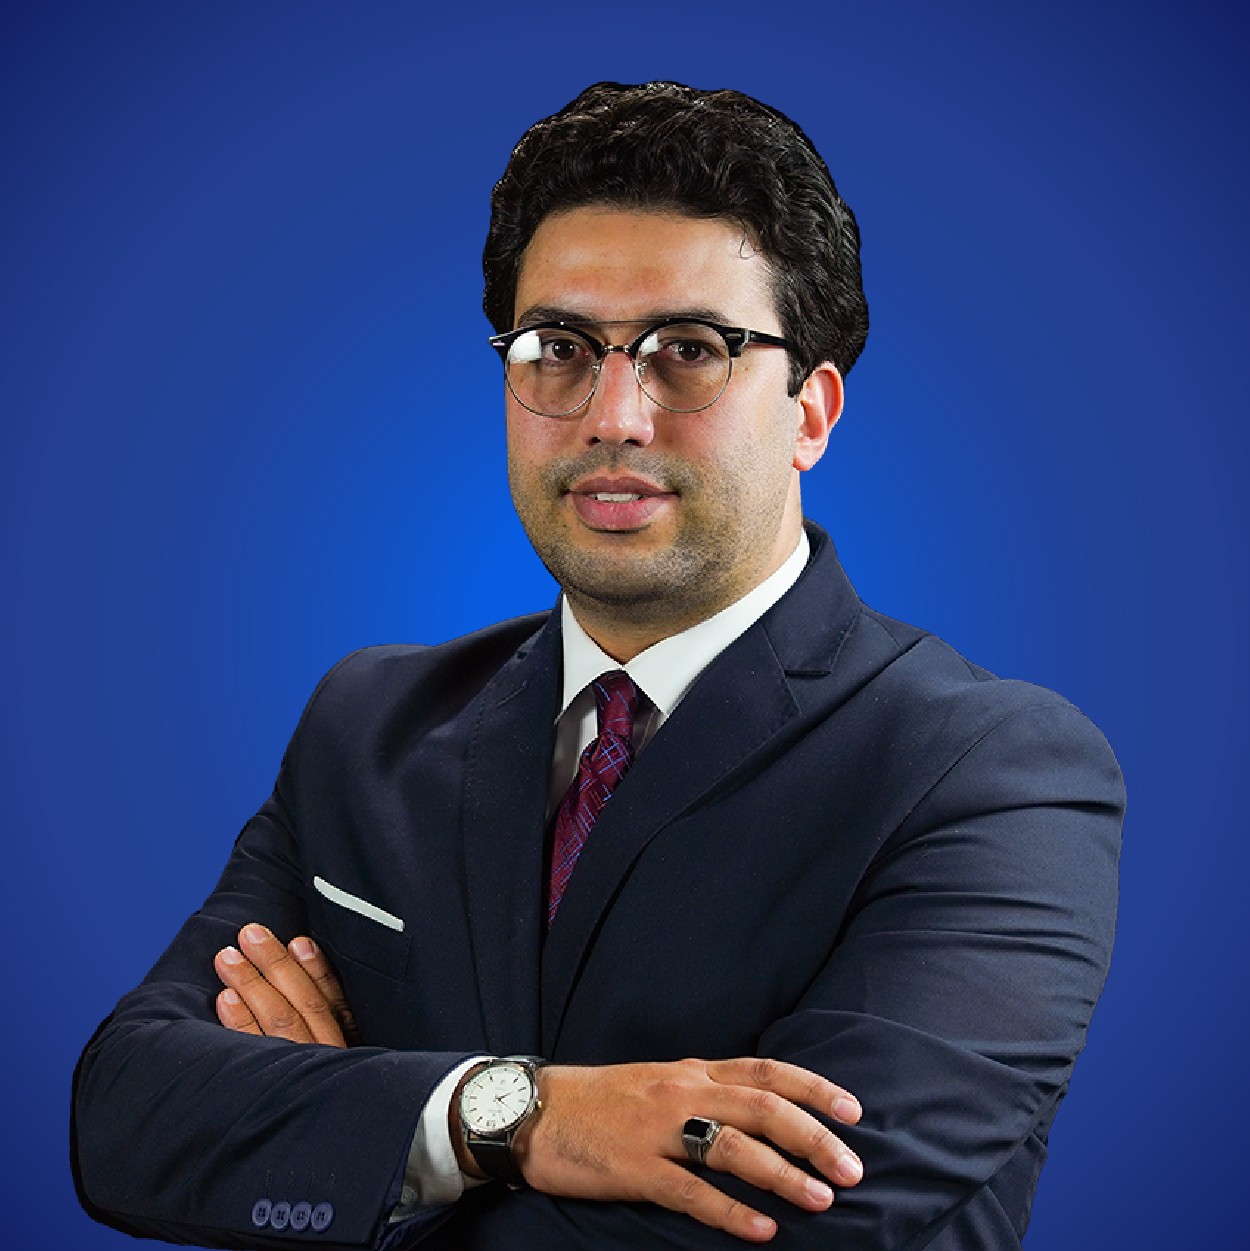 Dr. Mahmoud Ammar